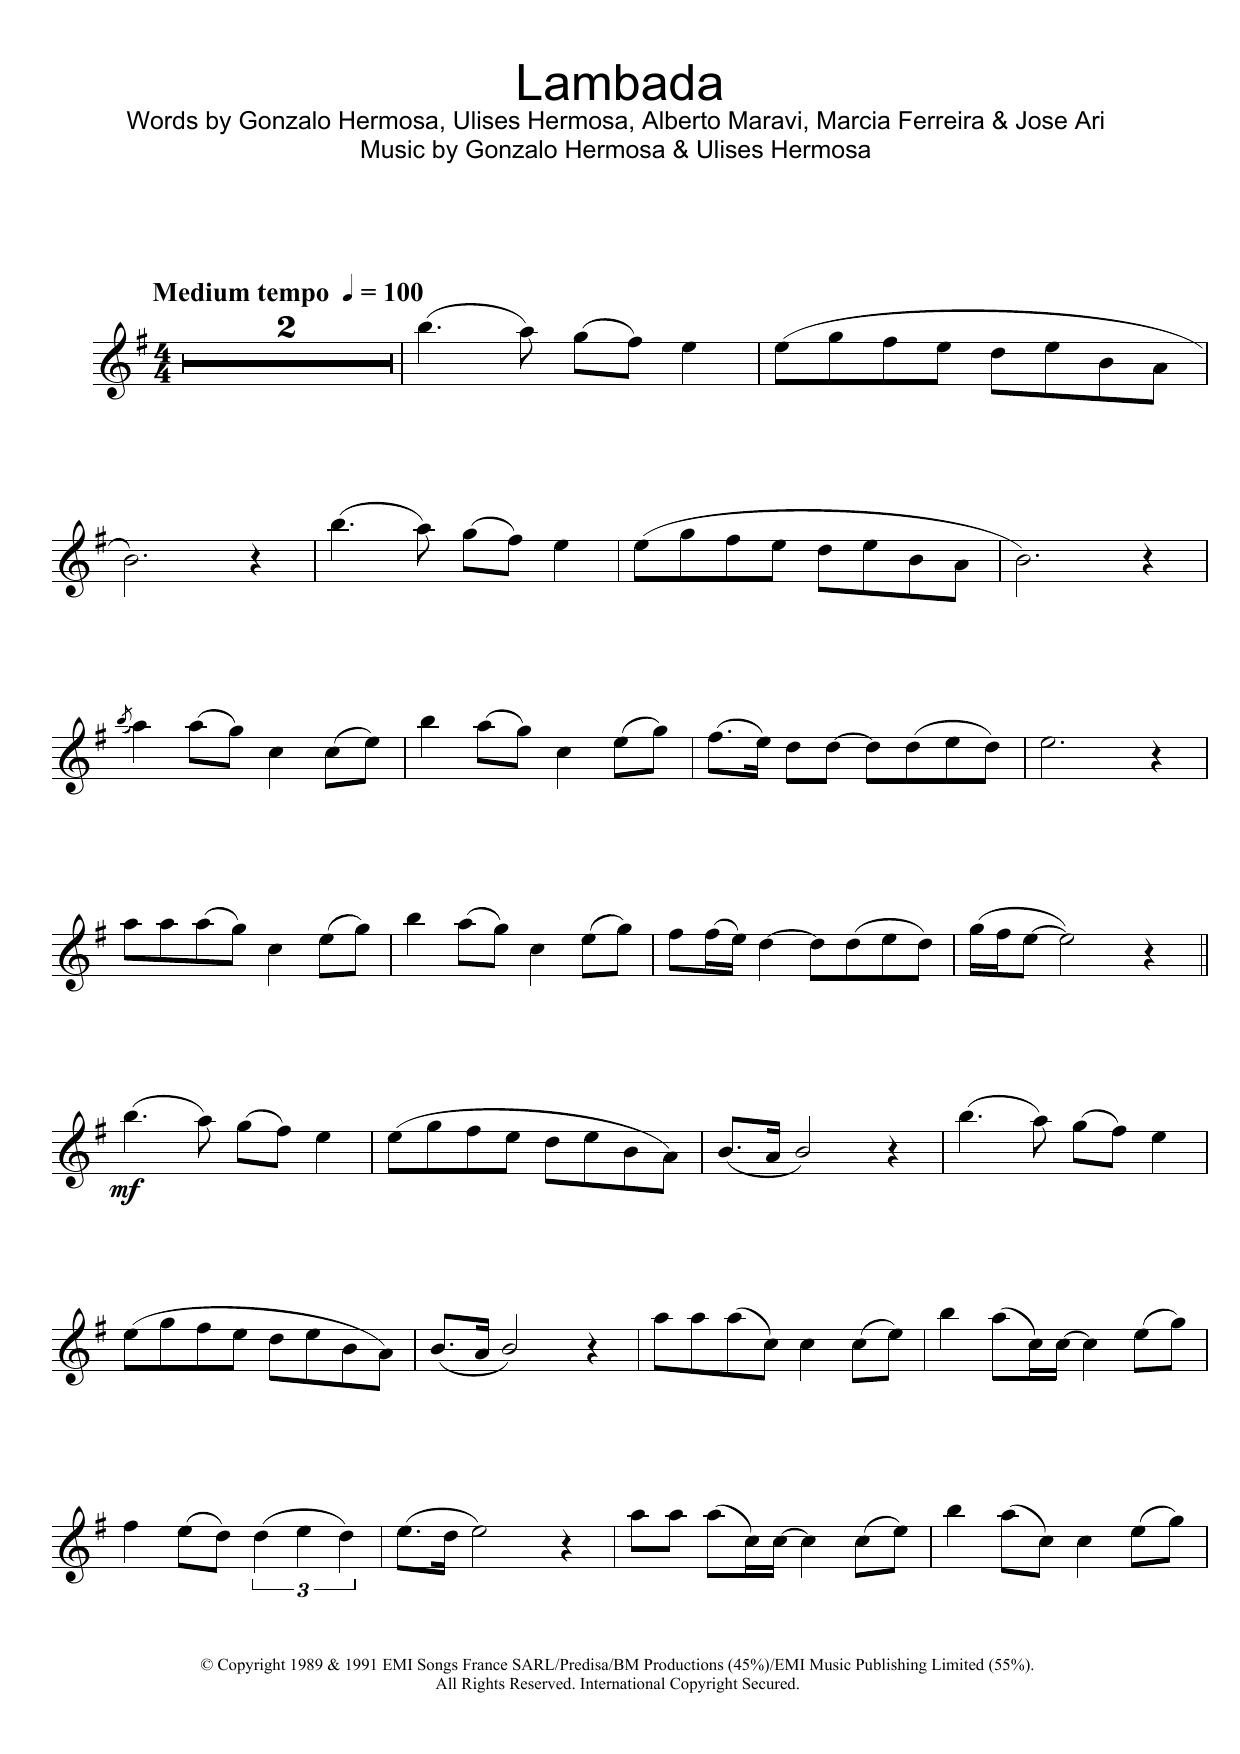 Kaoma Lambada Sheet Music Notes & Chords for Trumpet - Download or Print PDF